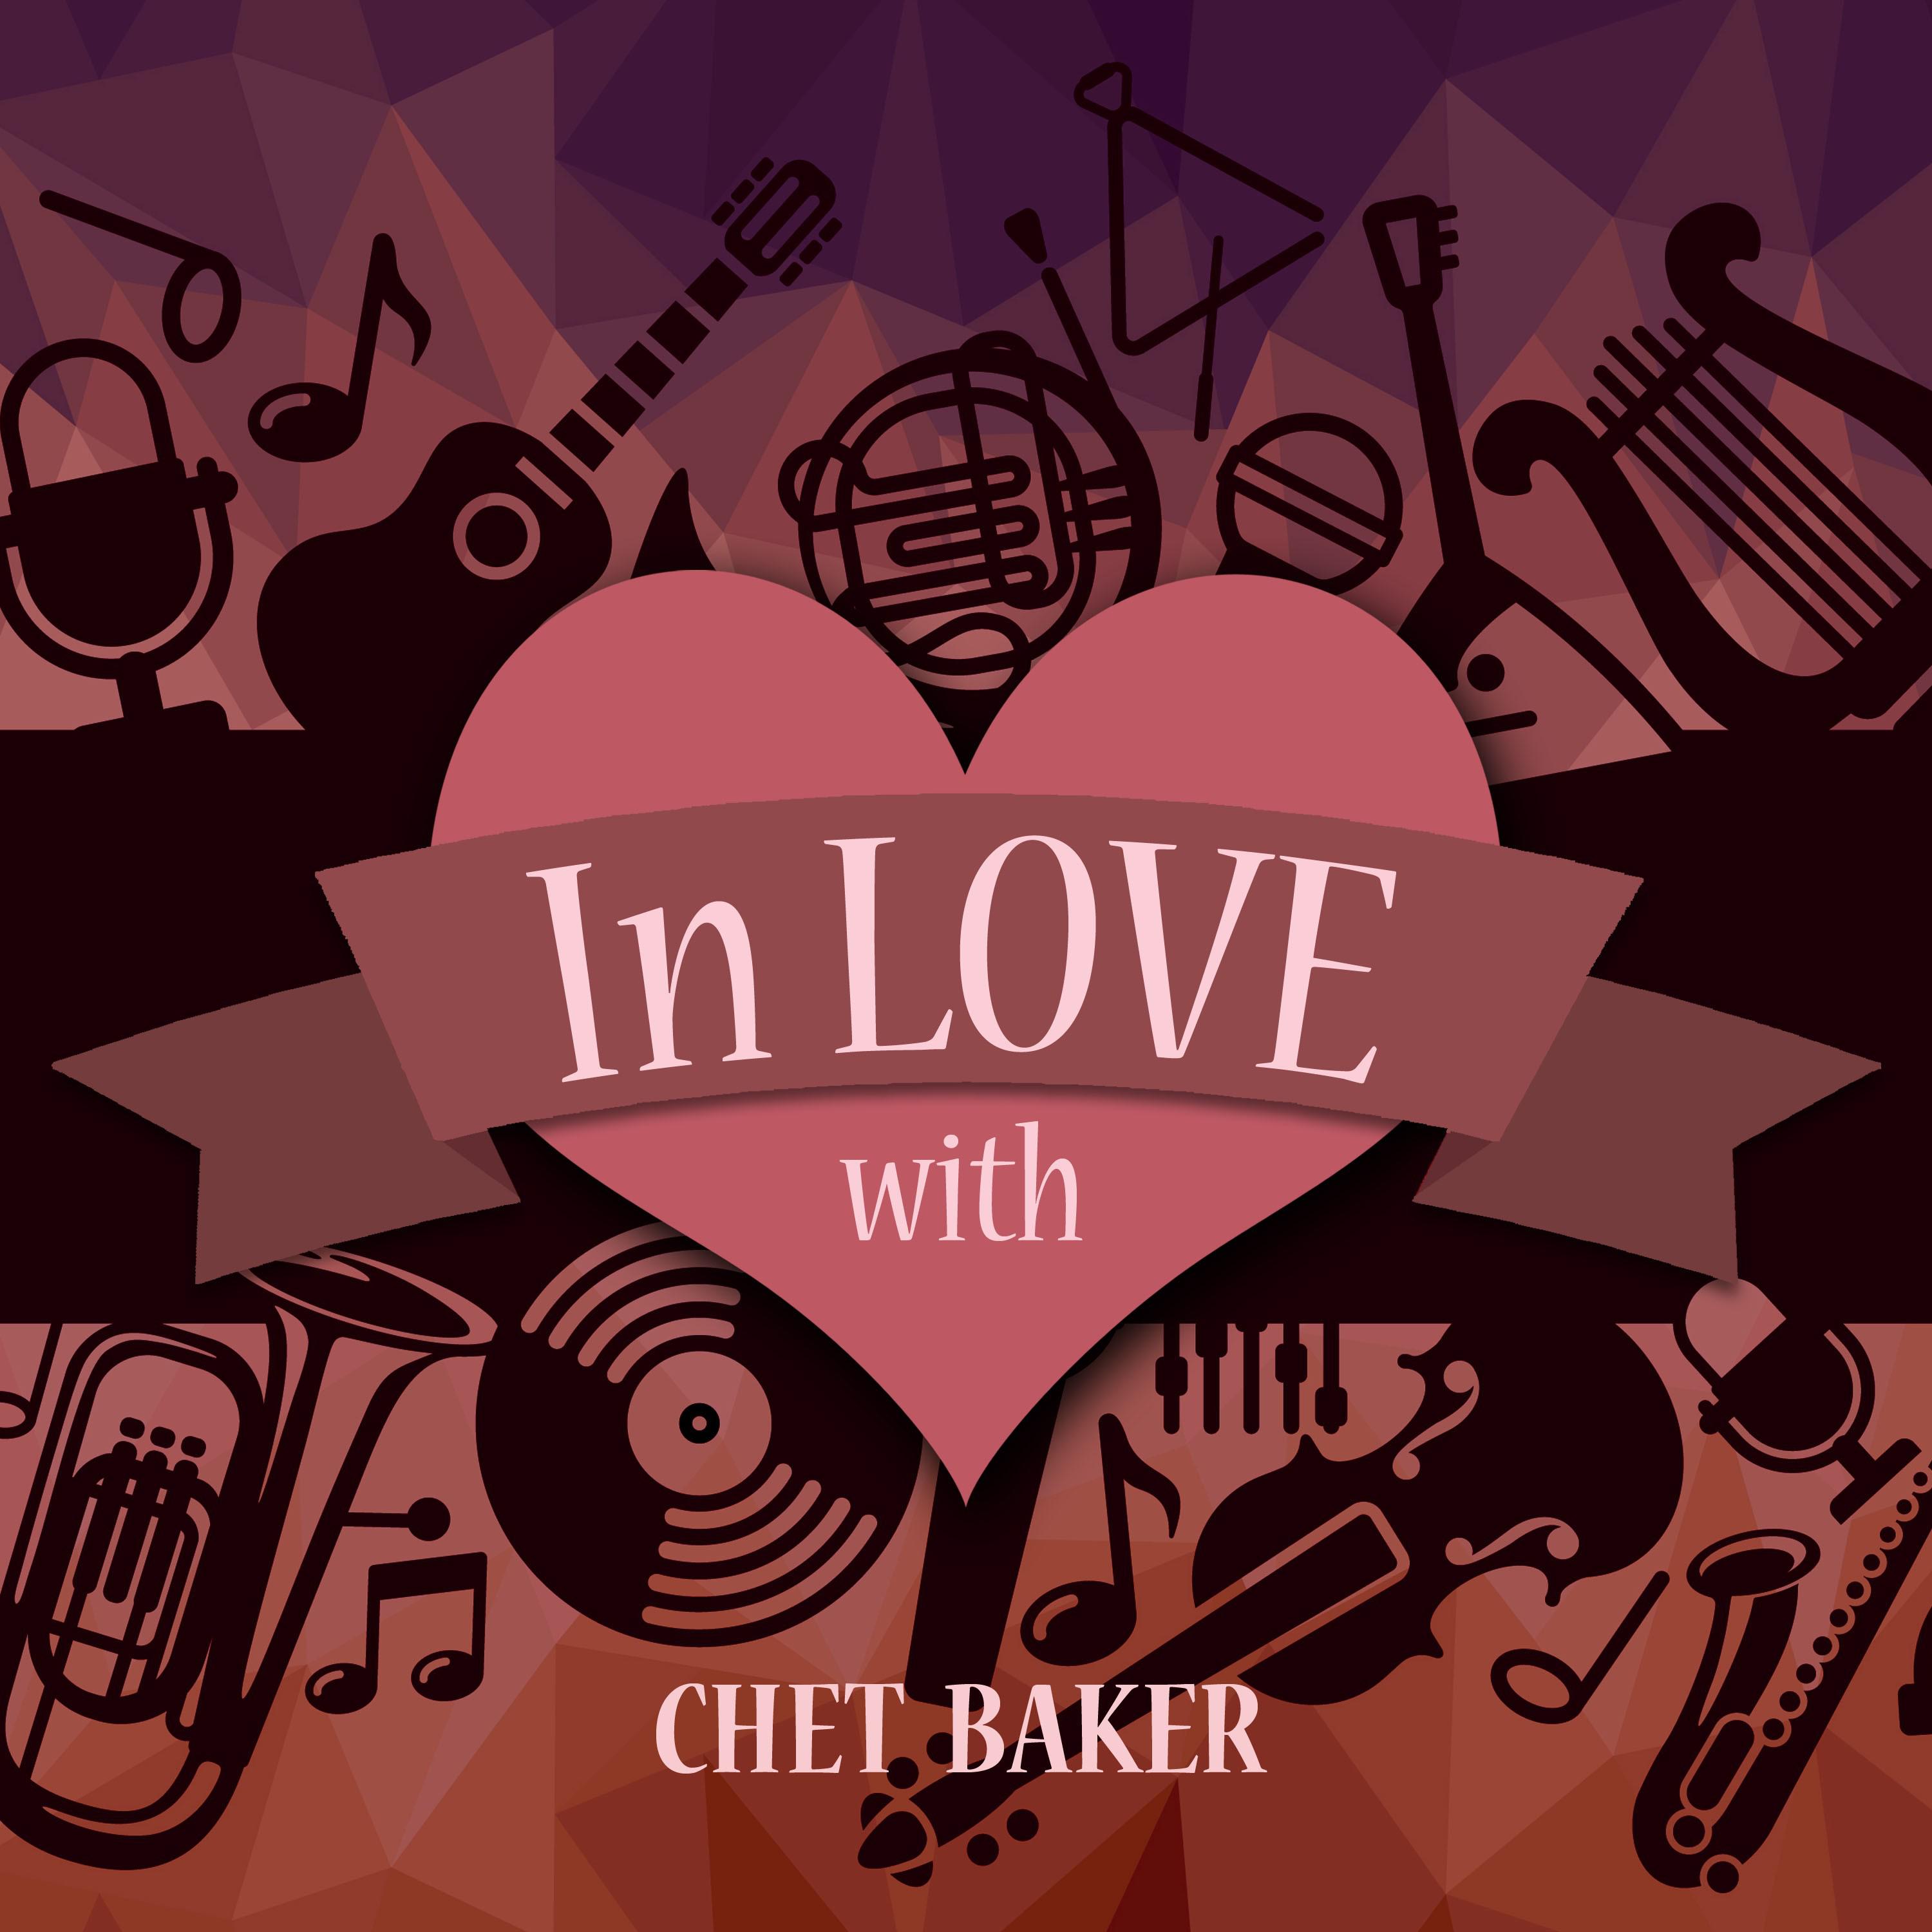 In Love with Chet Baker